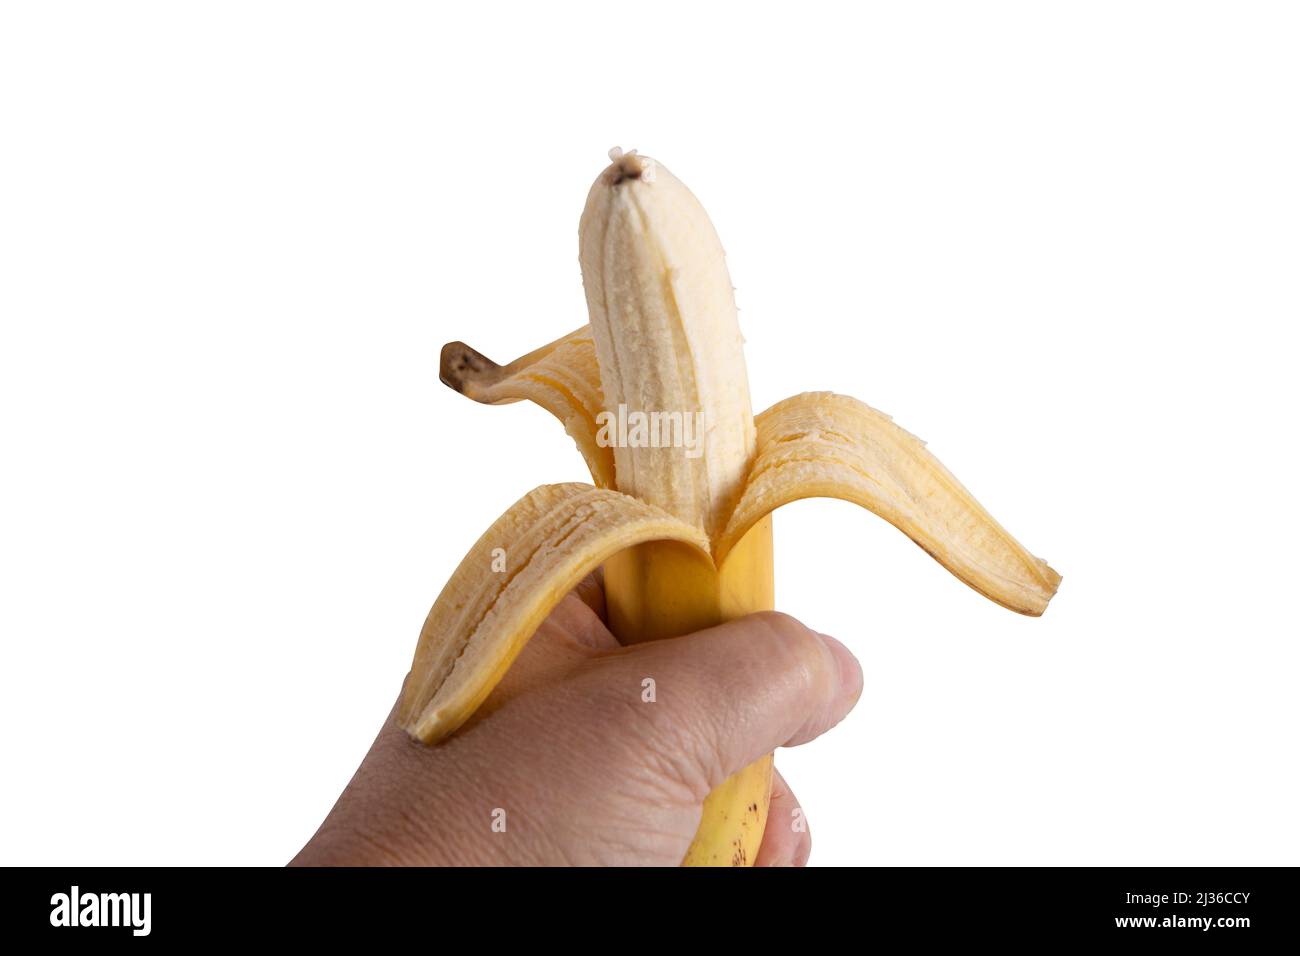 Freigestellte Banane bzw. Bananenschale. Foto de stock